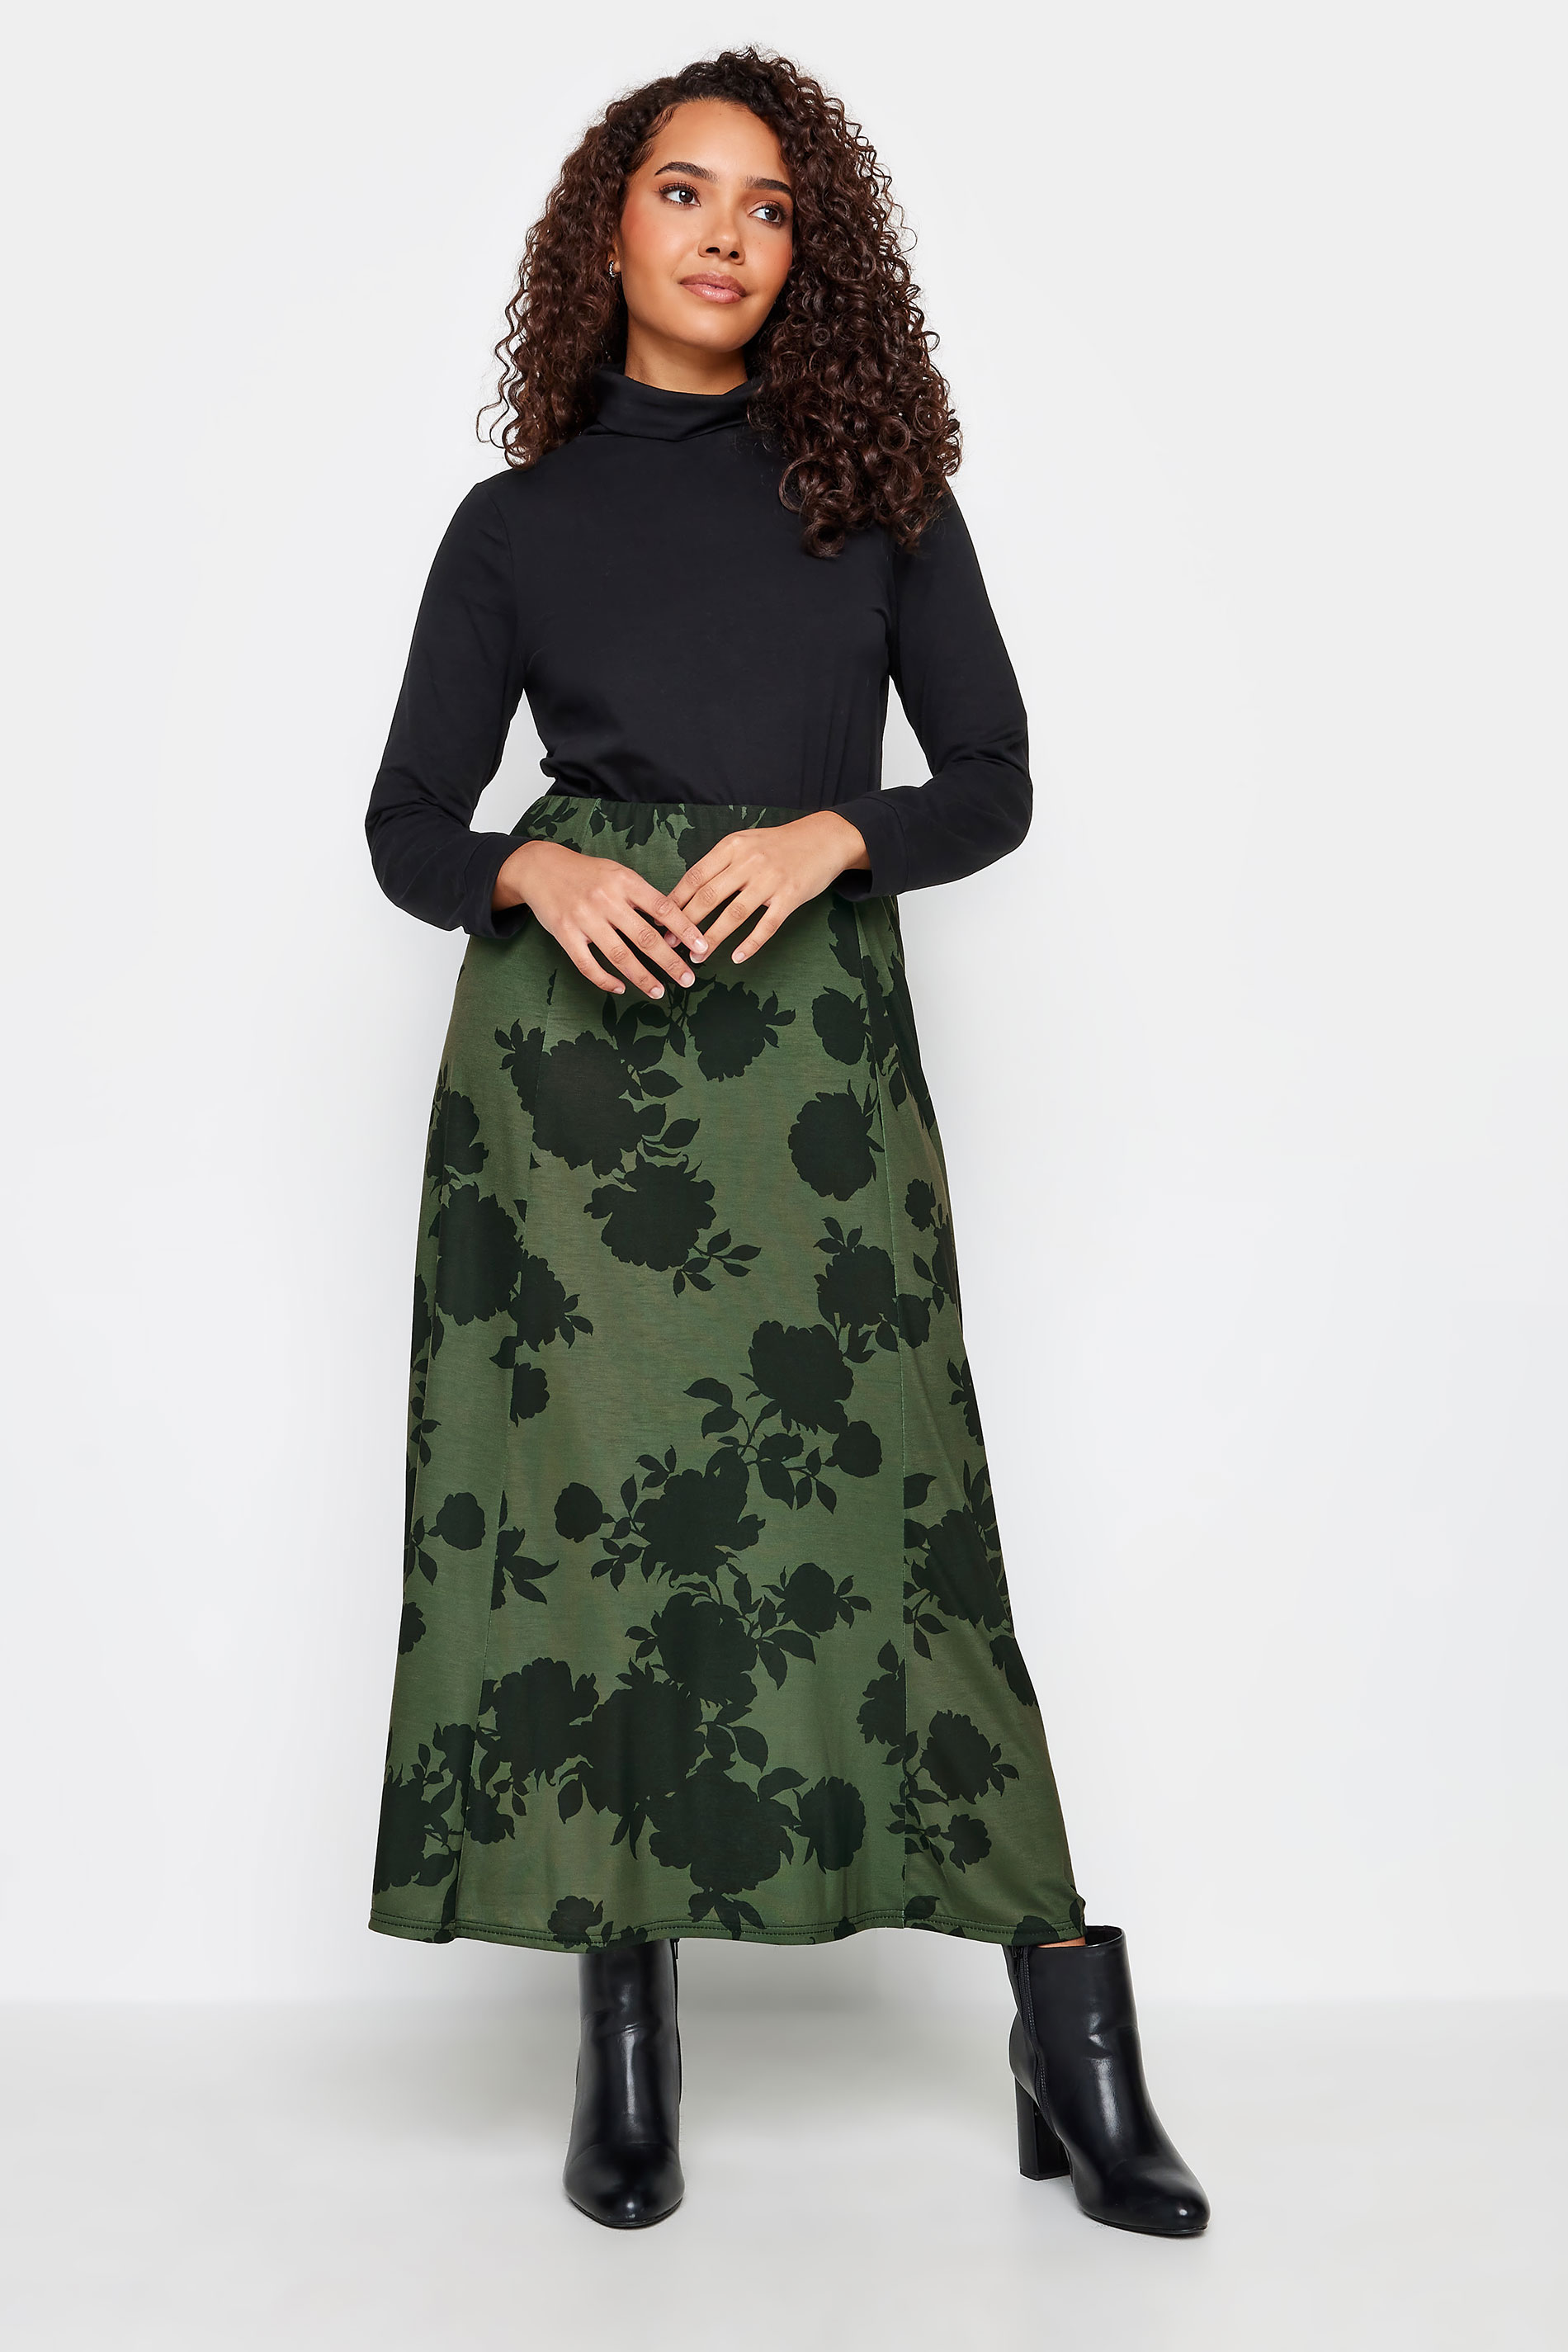 M&Co Khaki Green Floral Print Maxi Skirt | M&Co 2